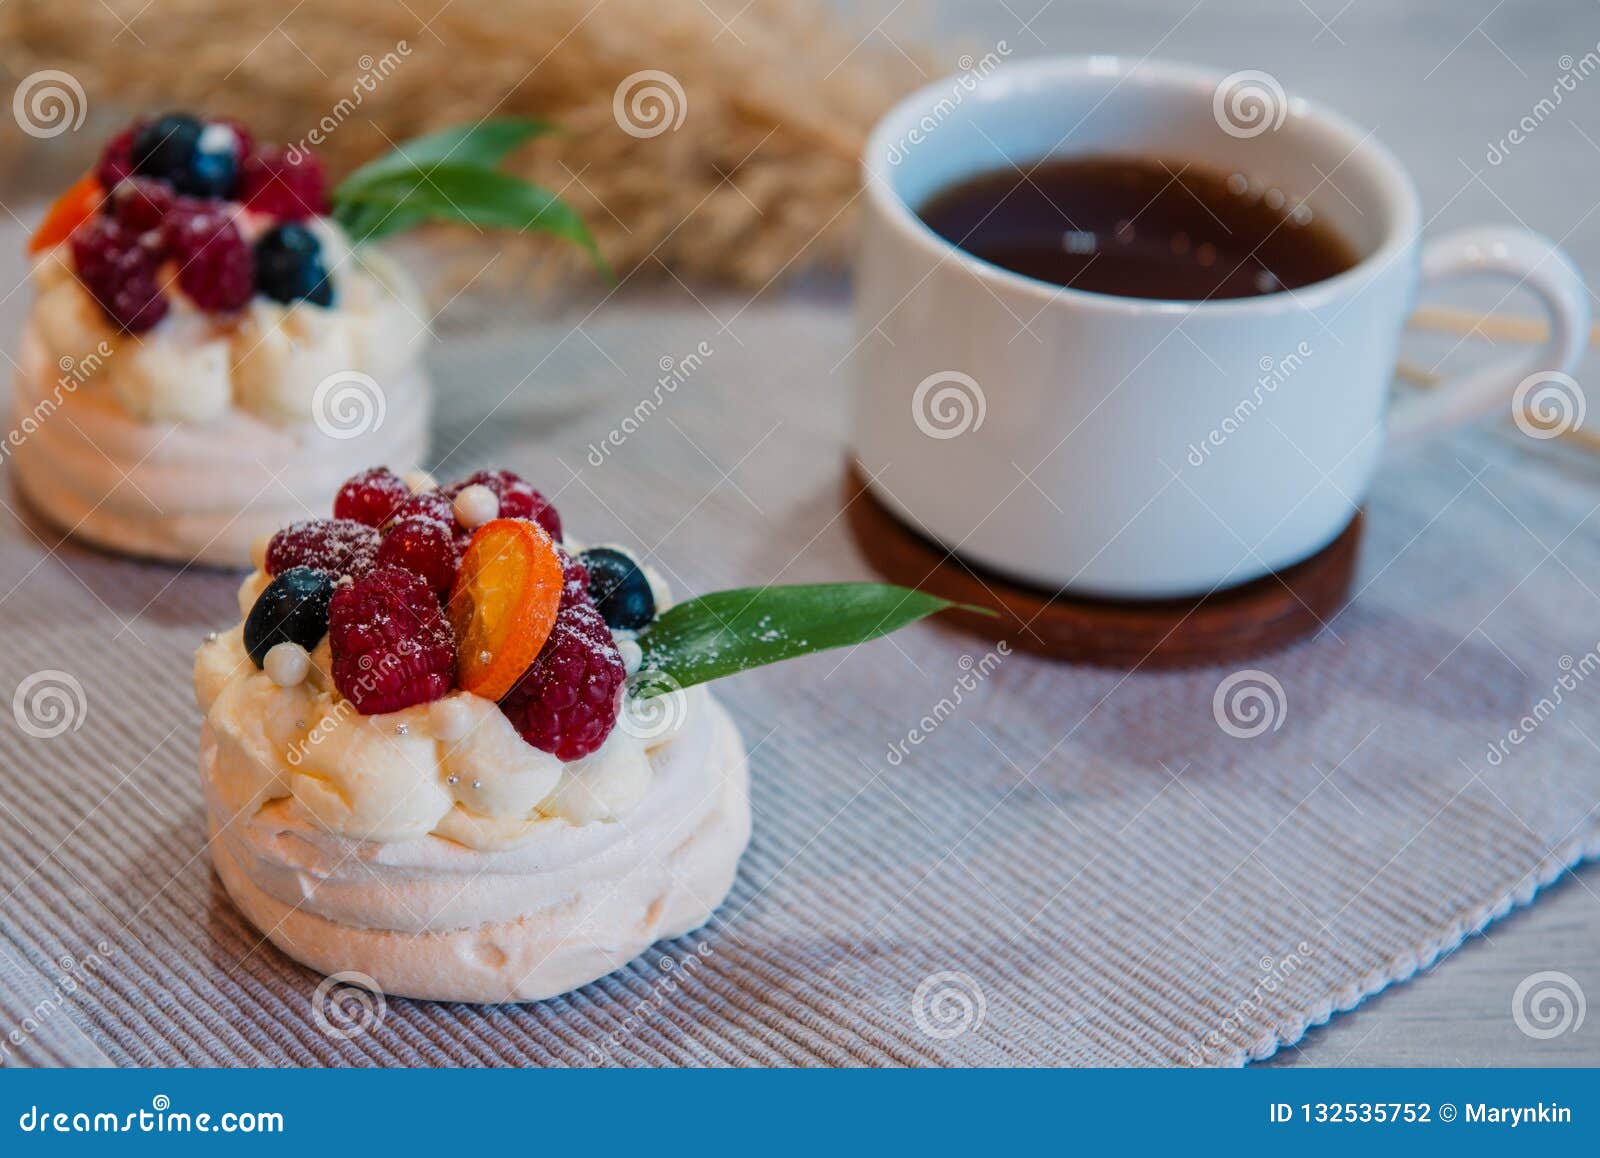 Pavlova Meringue Cake With Cream And Small Fruits Stock ...